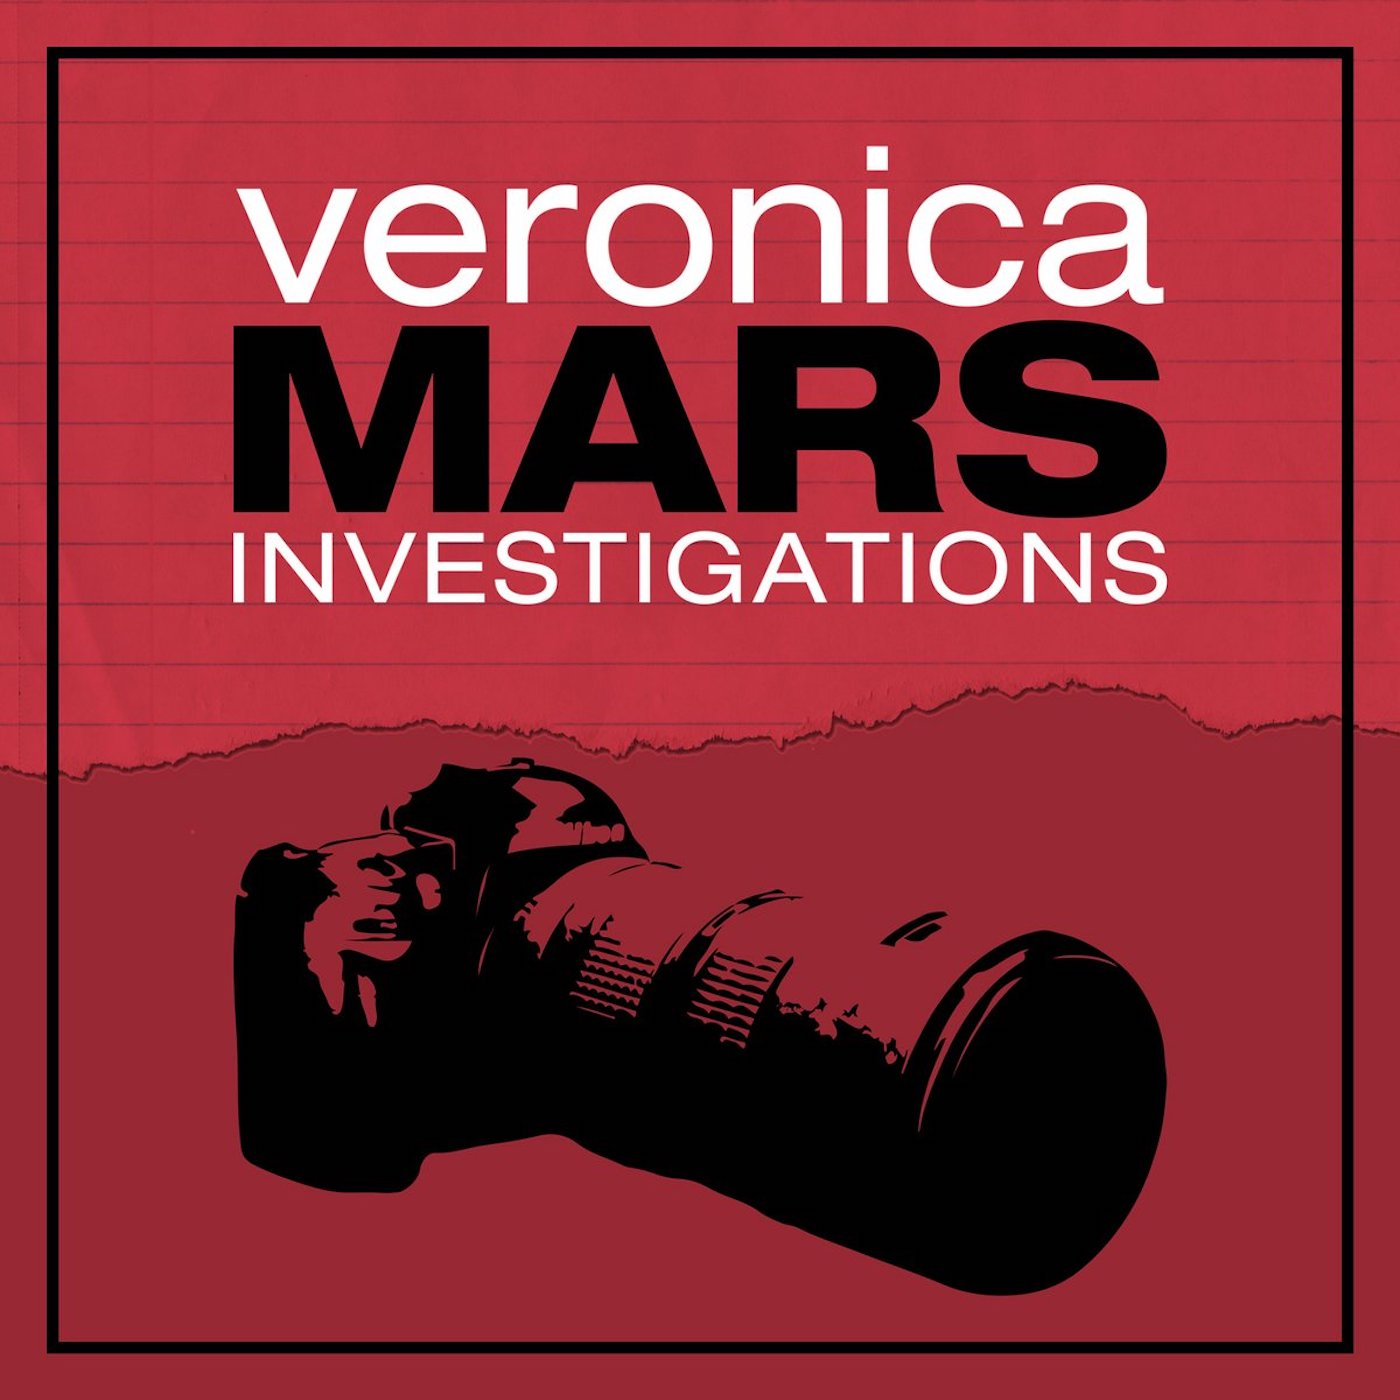 Veronica Mars Investigations trailer